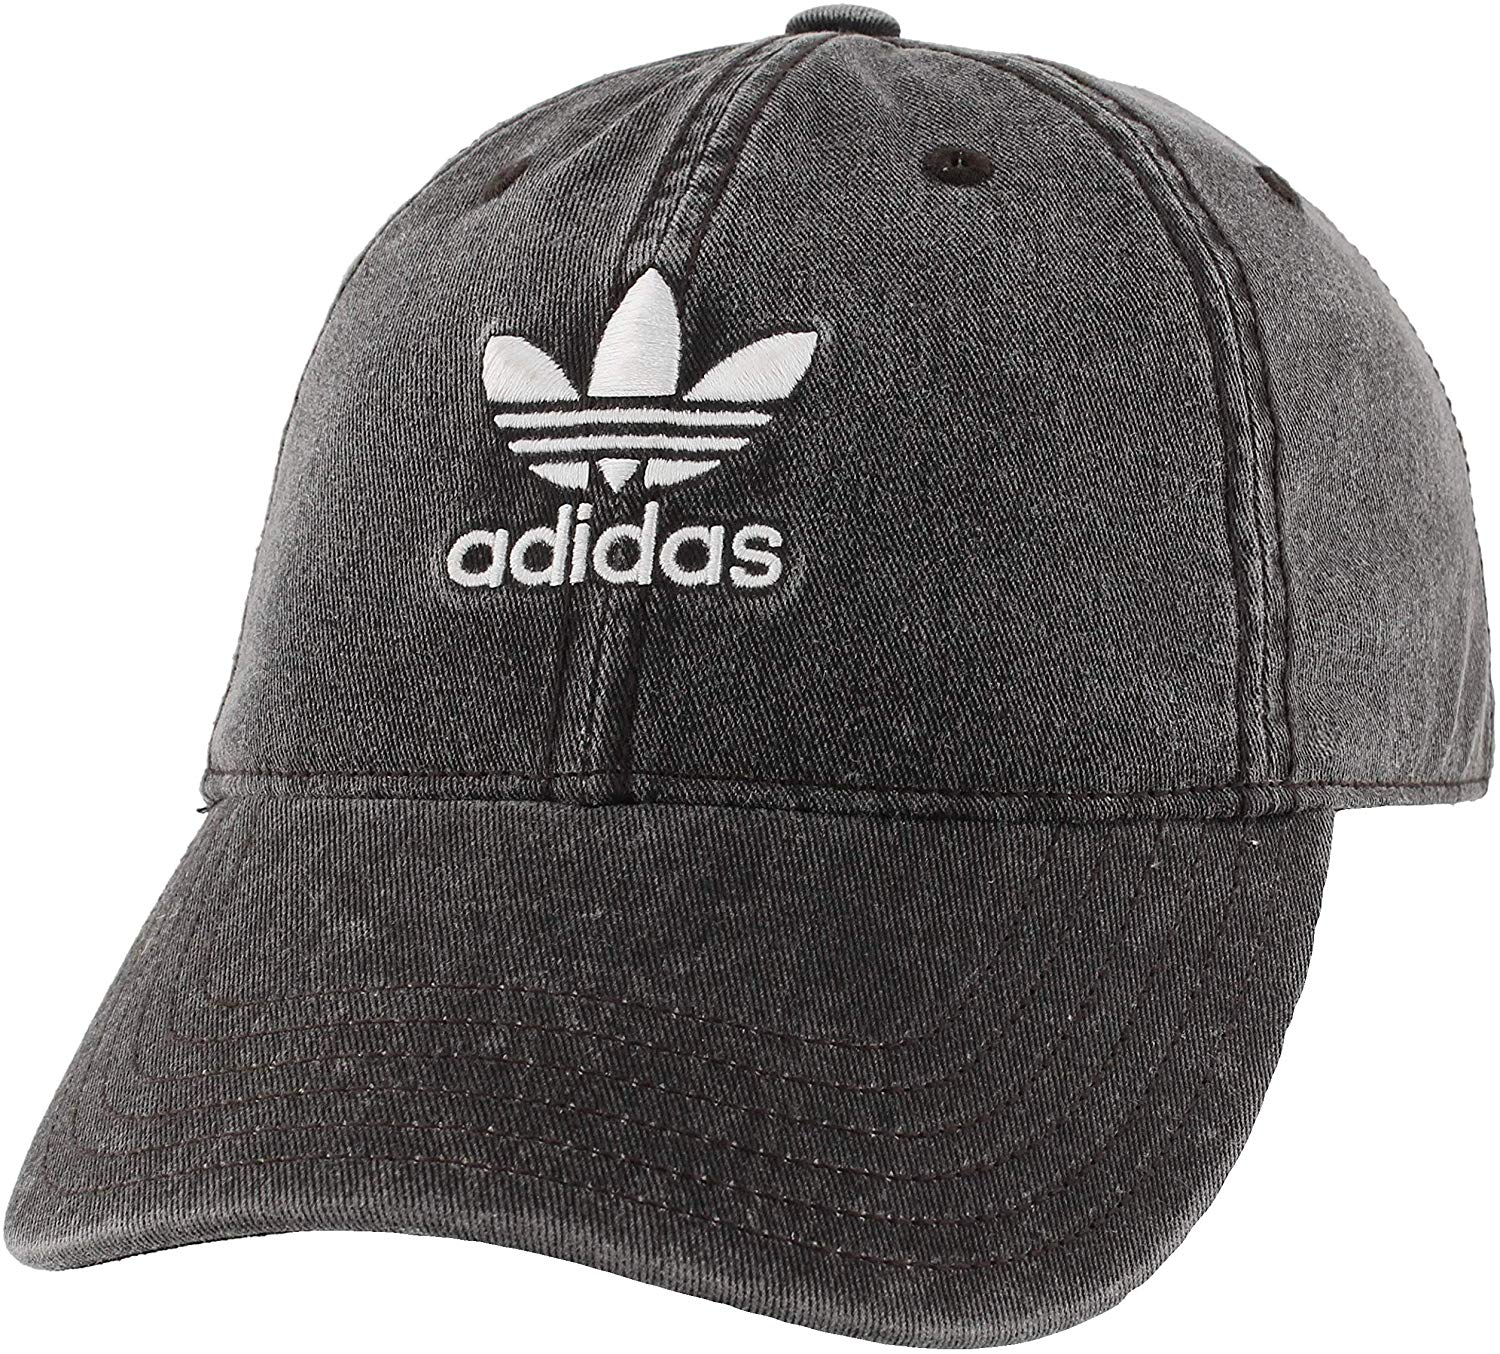 Adidas Womens Originals Relaxed Adjustable Strapback Golf Caps